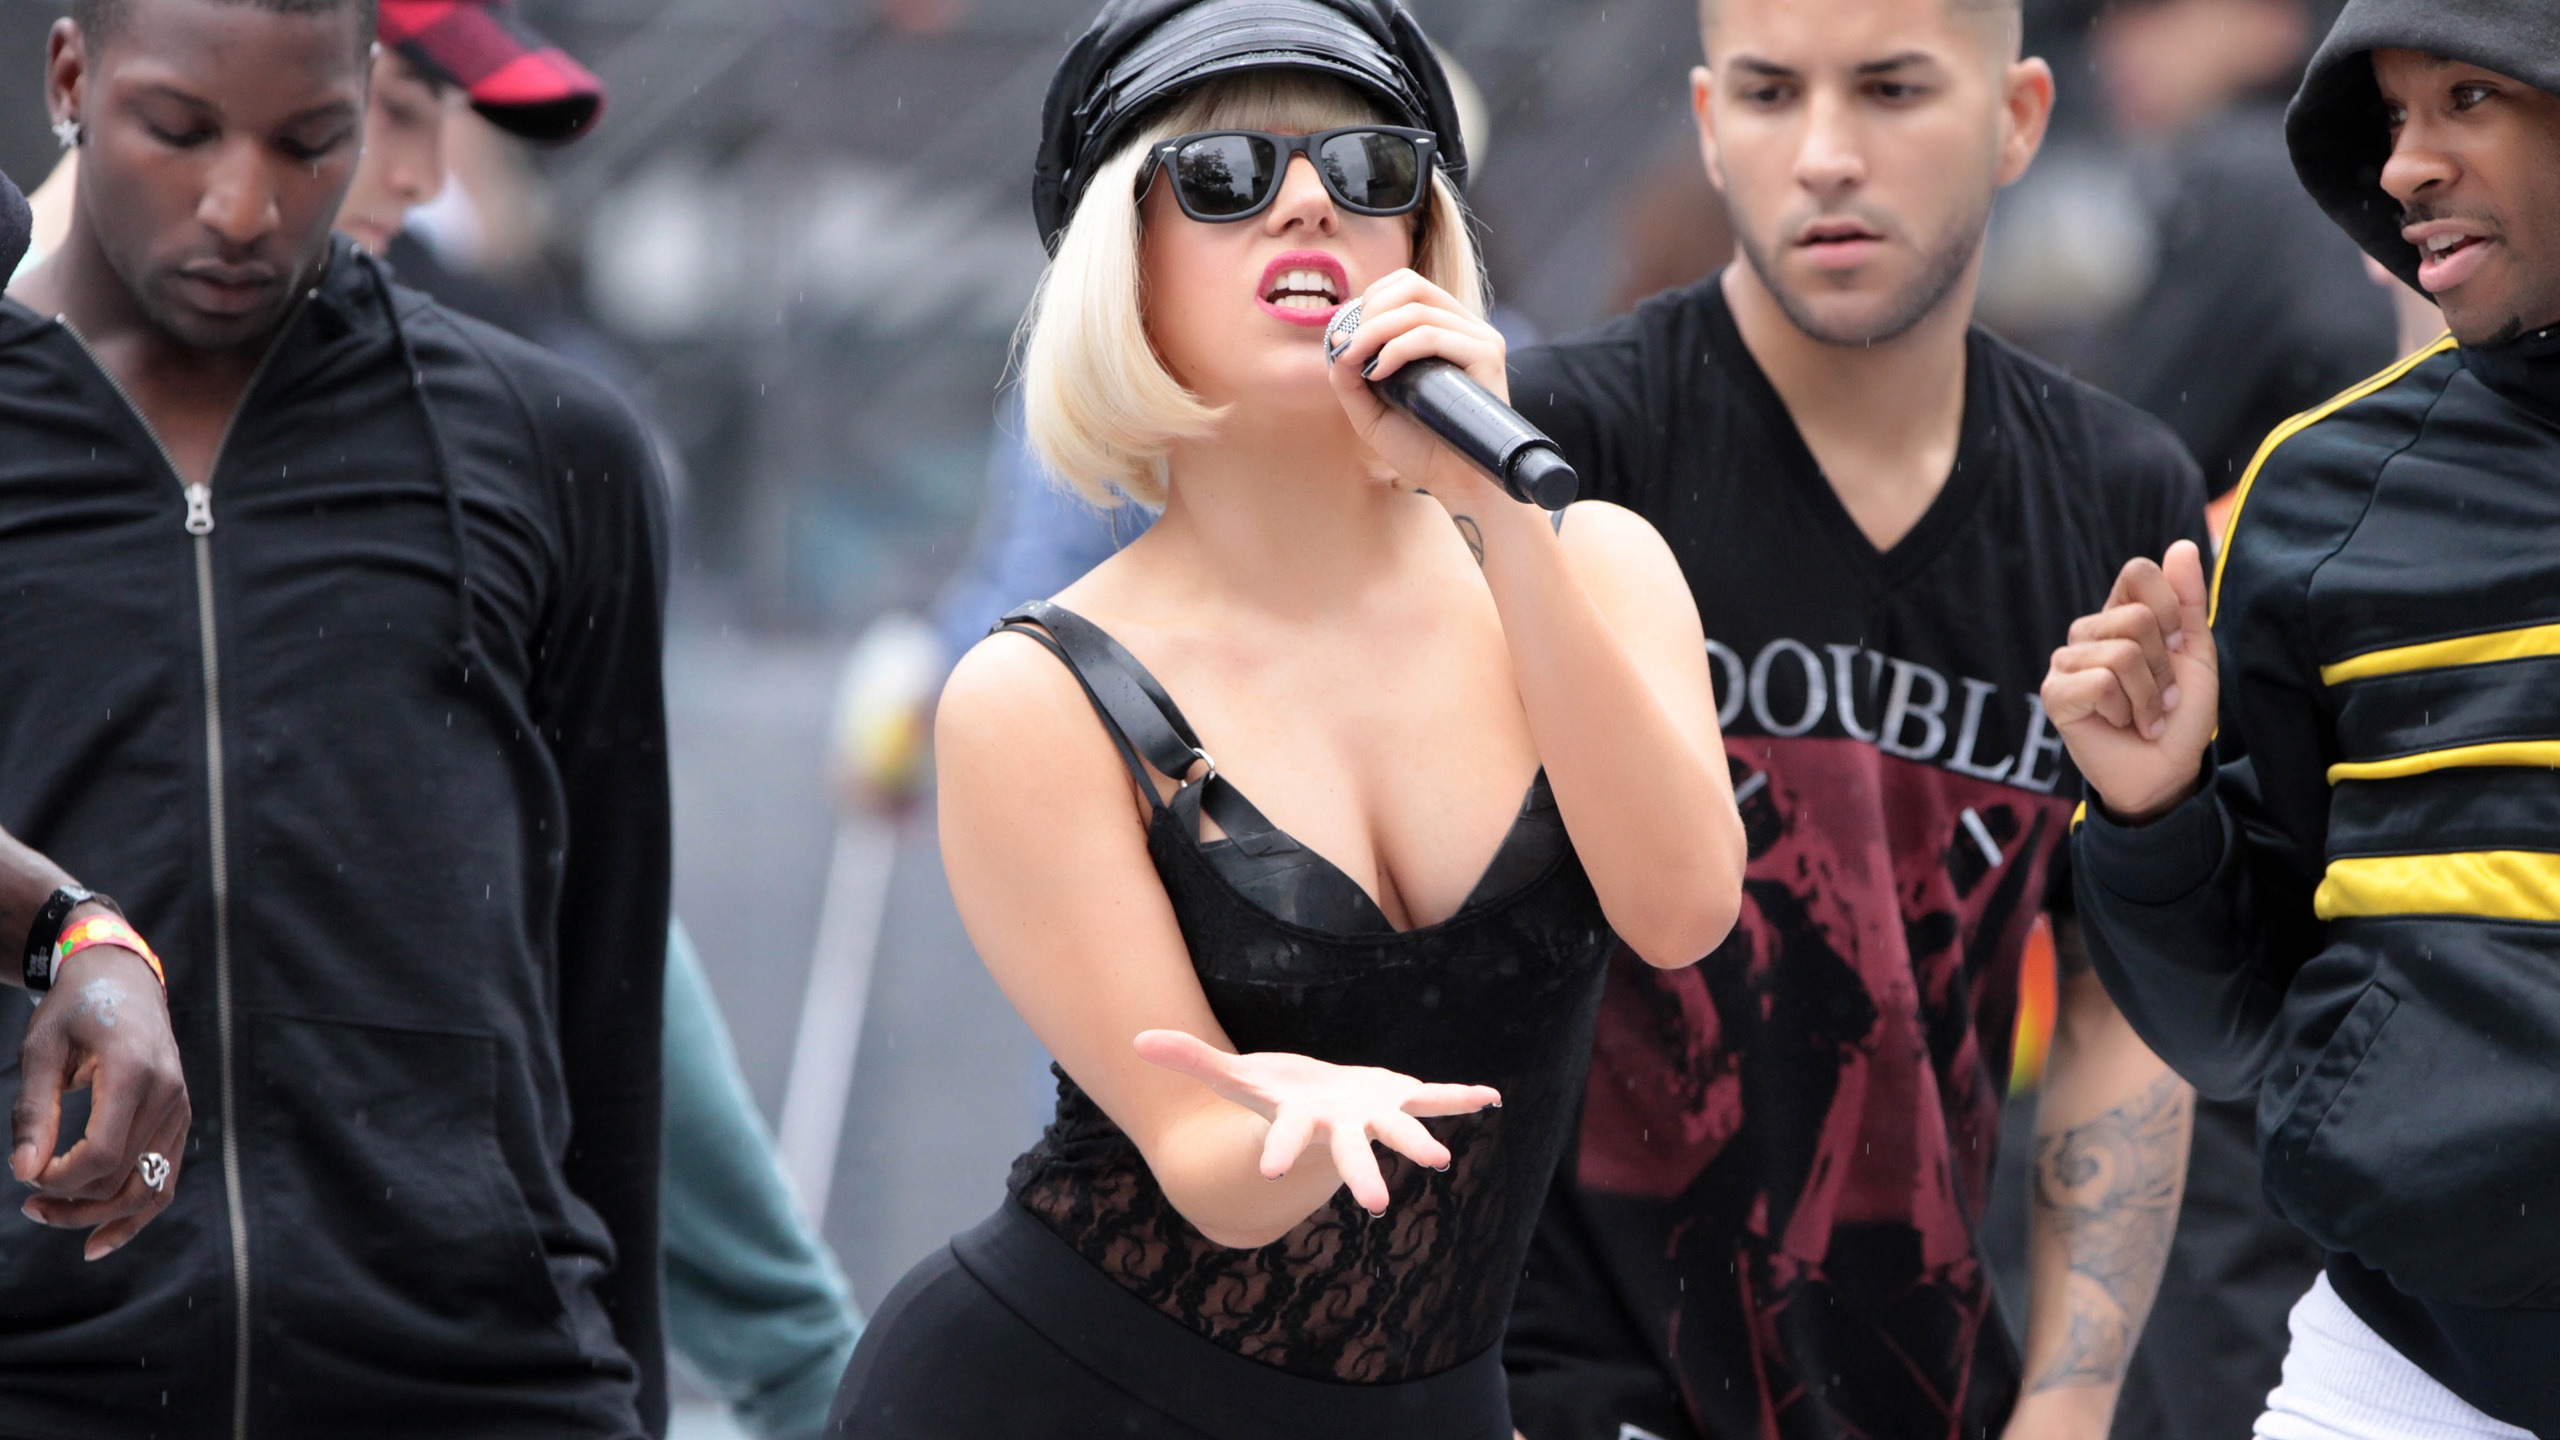 Lady Gaga Live for 2560x1440 HDTV resolution